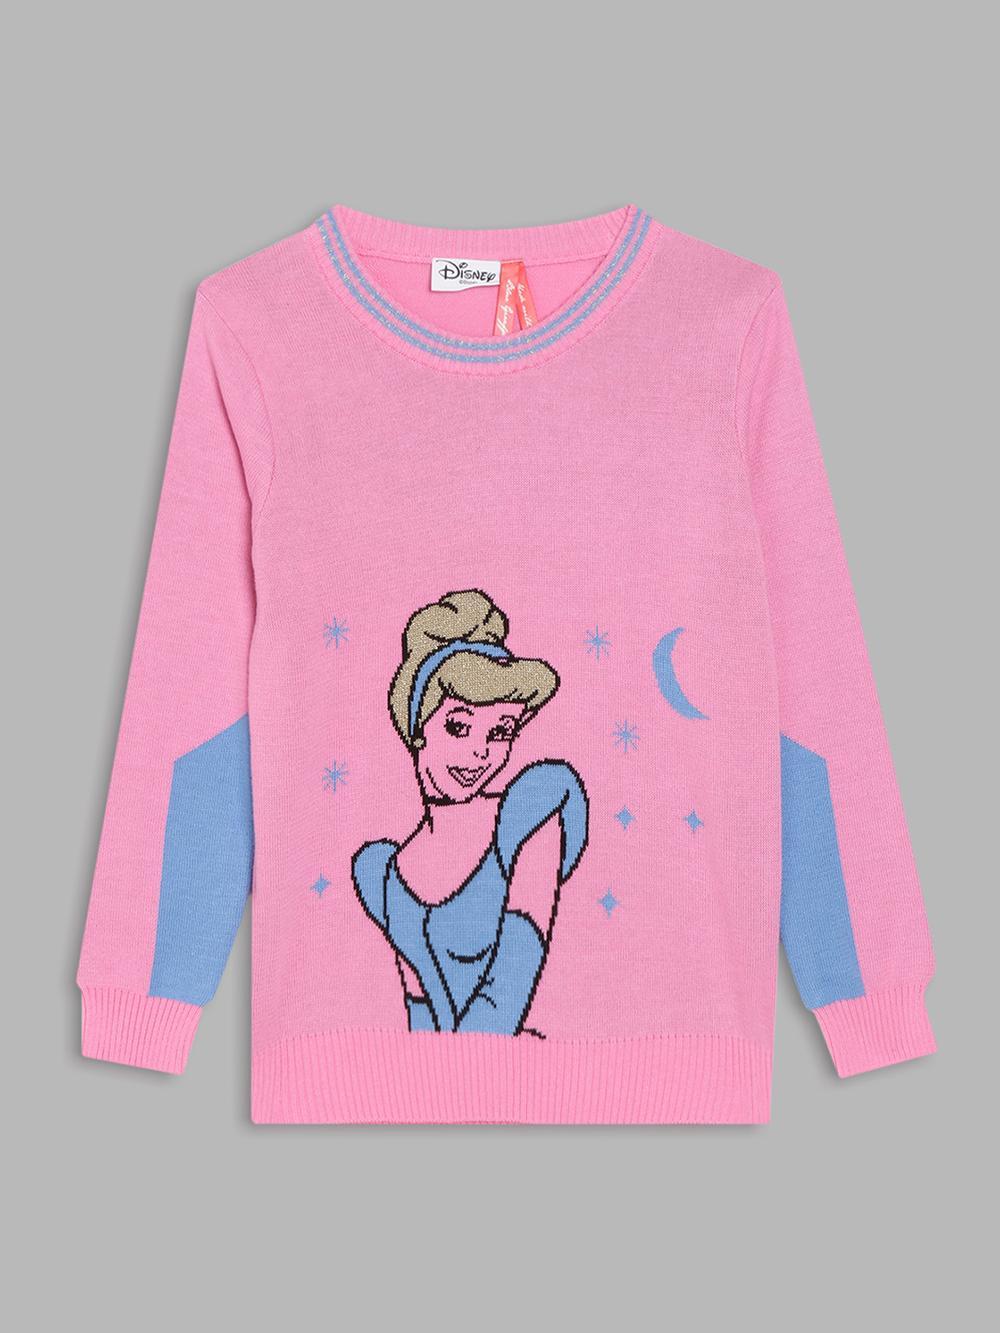 disney girls pink sweater